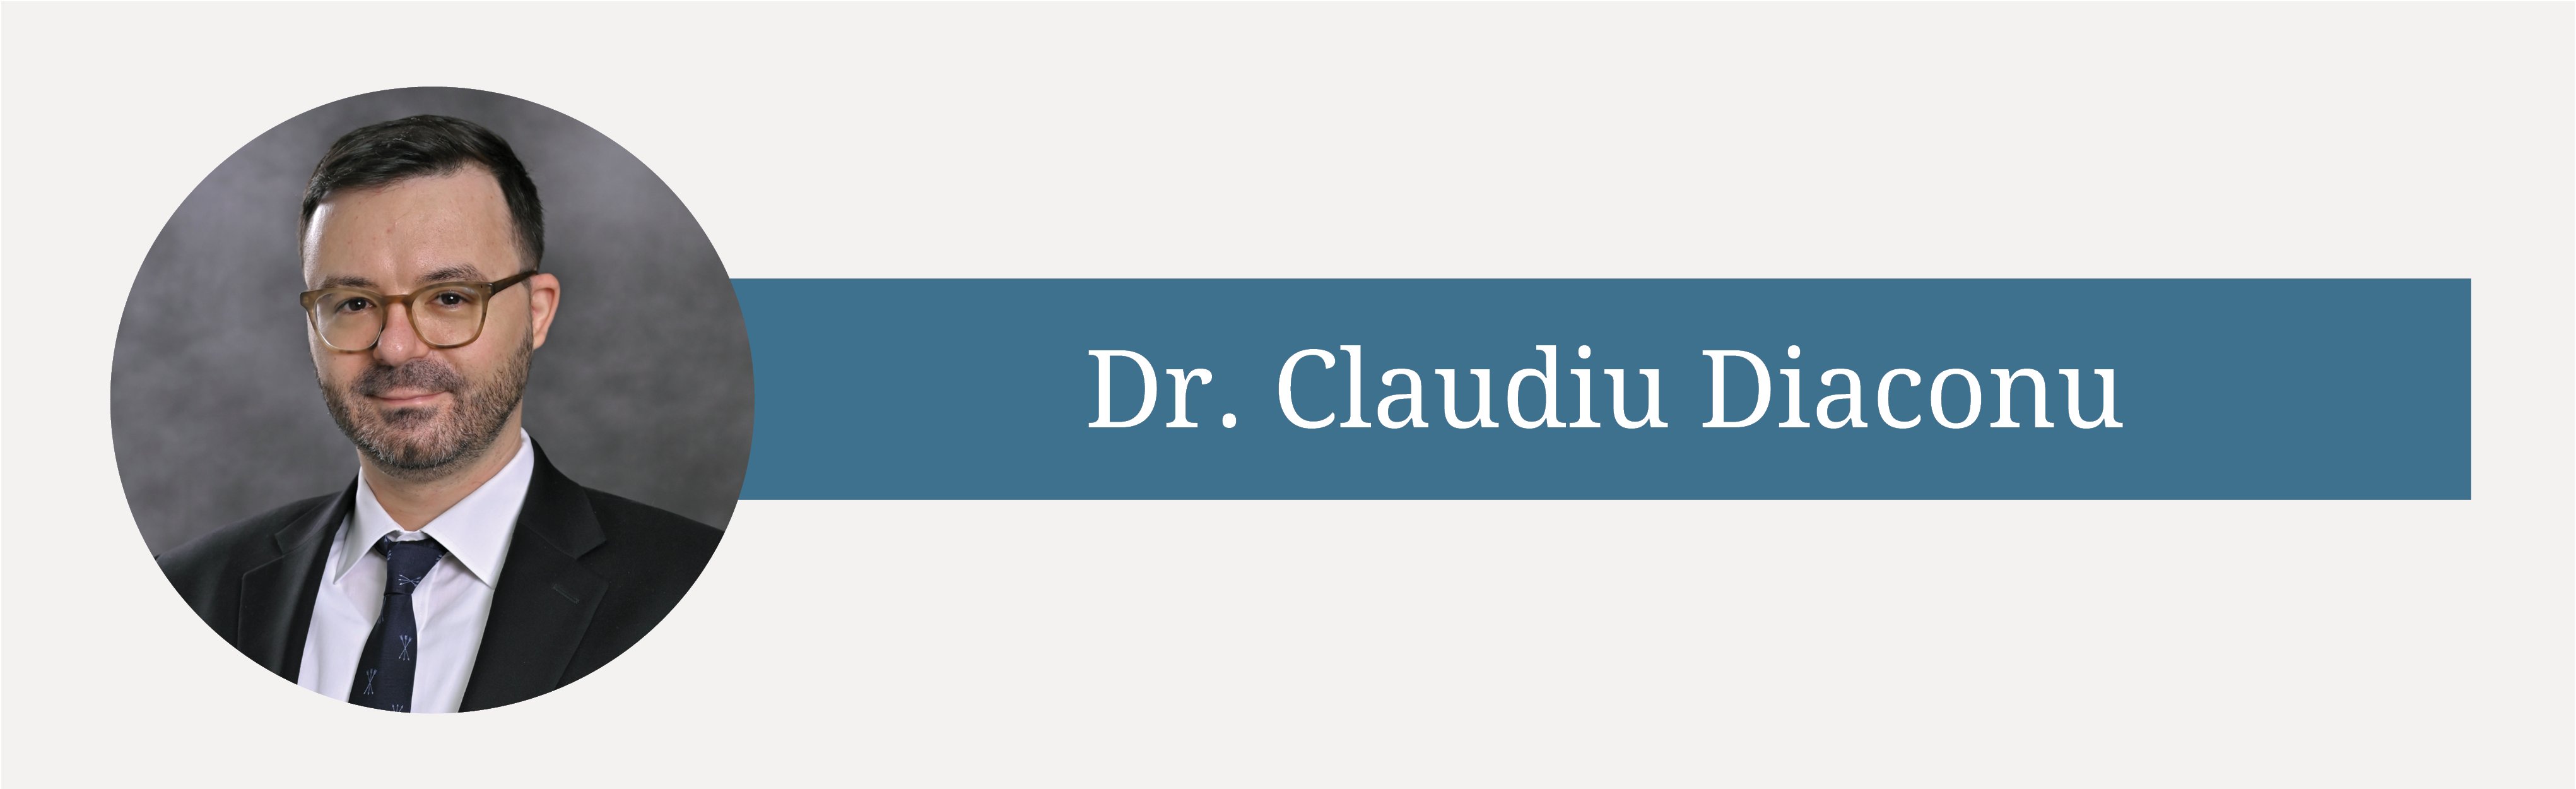 Neurologist Dr. Claudiu Diaconu Joins White Plains Hospital